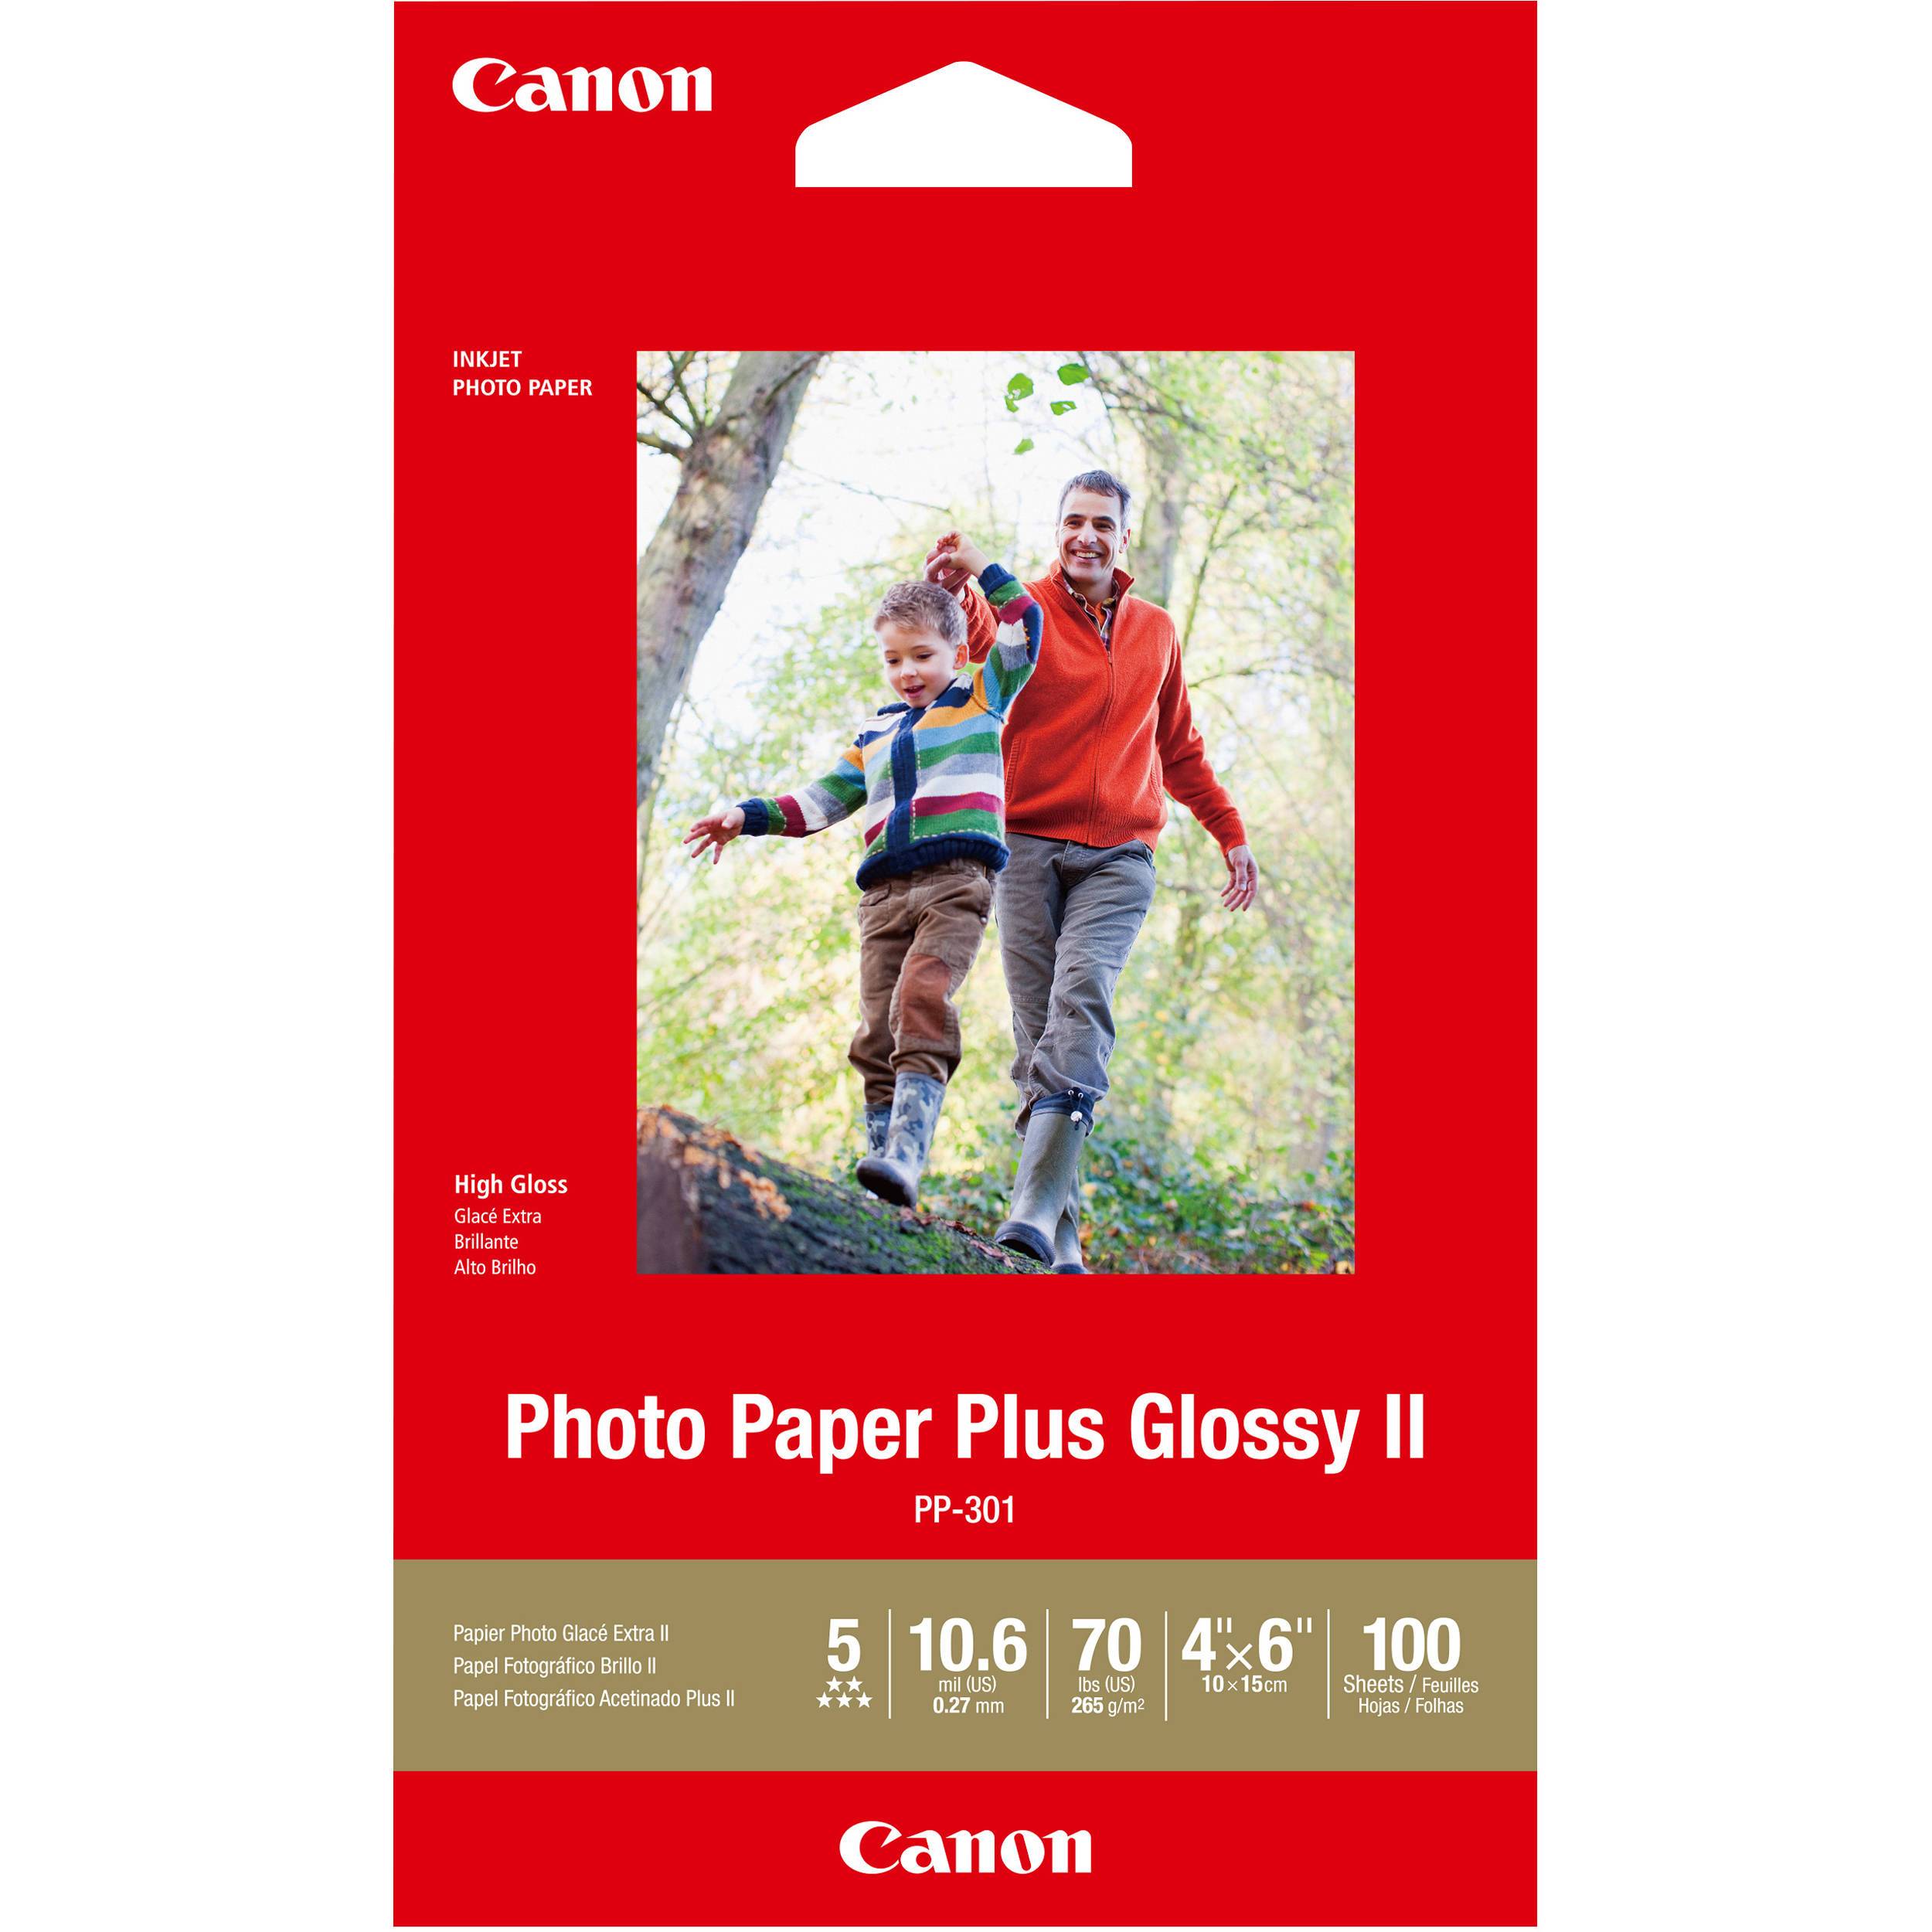 Absolute Toner Copy of Canon Ink Photo Paper Plus Glossy II Original Genuine OEM | 1432C006 Original Canon Cartridges